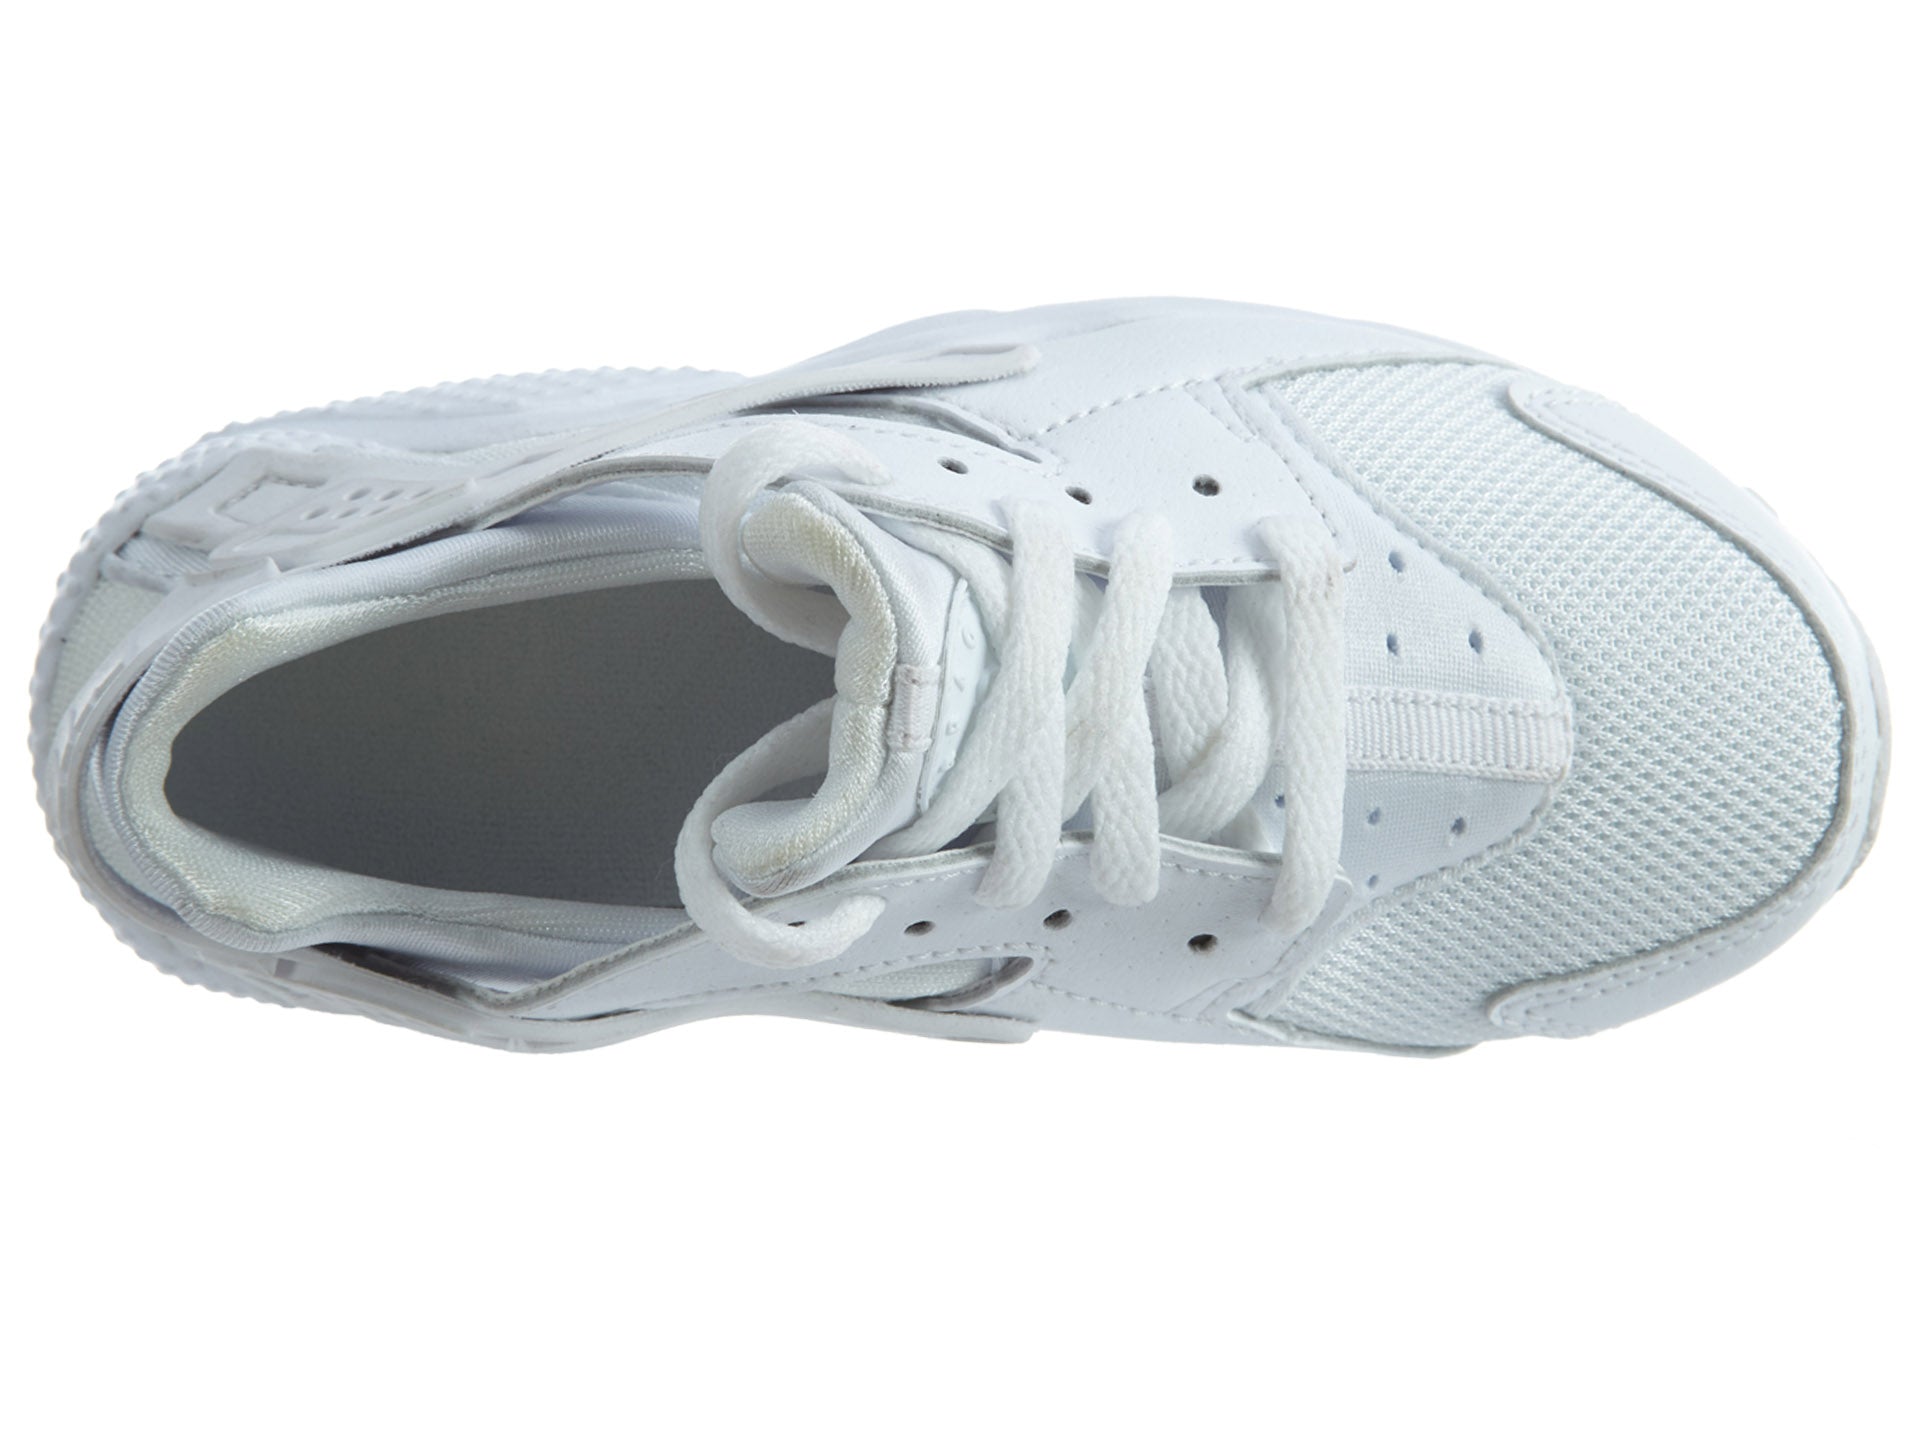 Nike Huarache Run White Preschool  Boys / Girls Style :704949